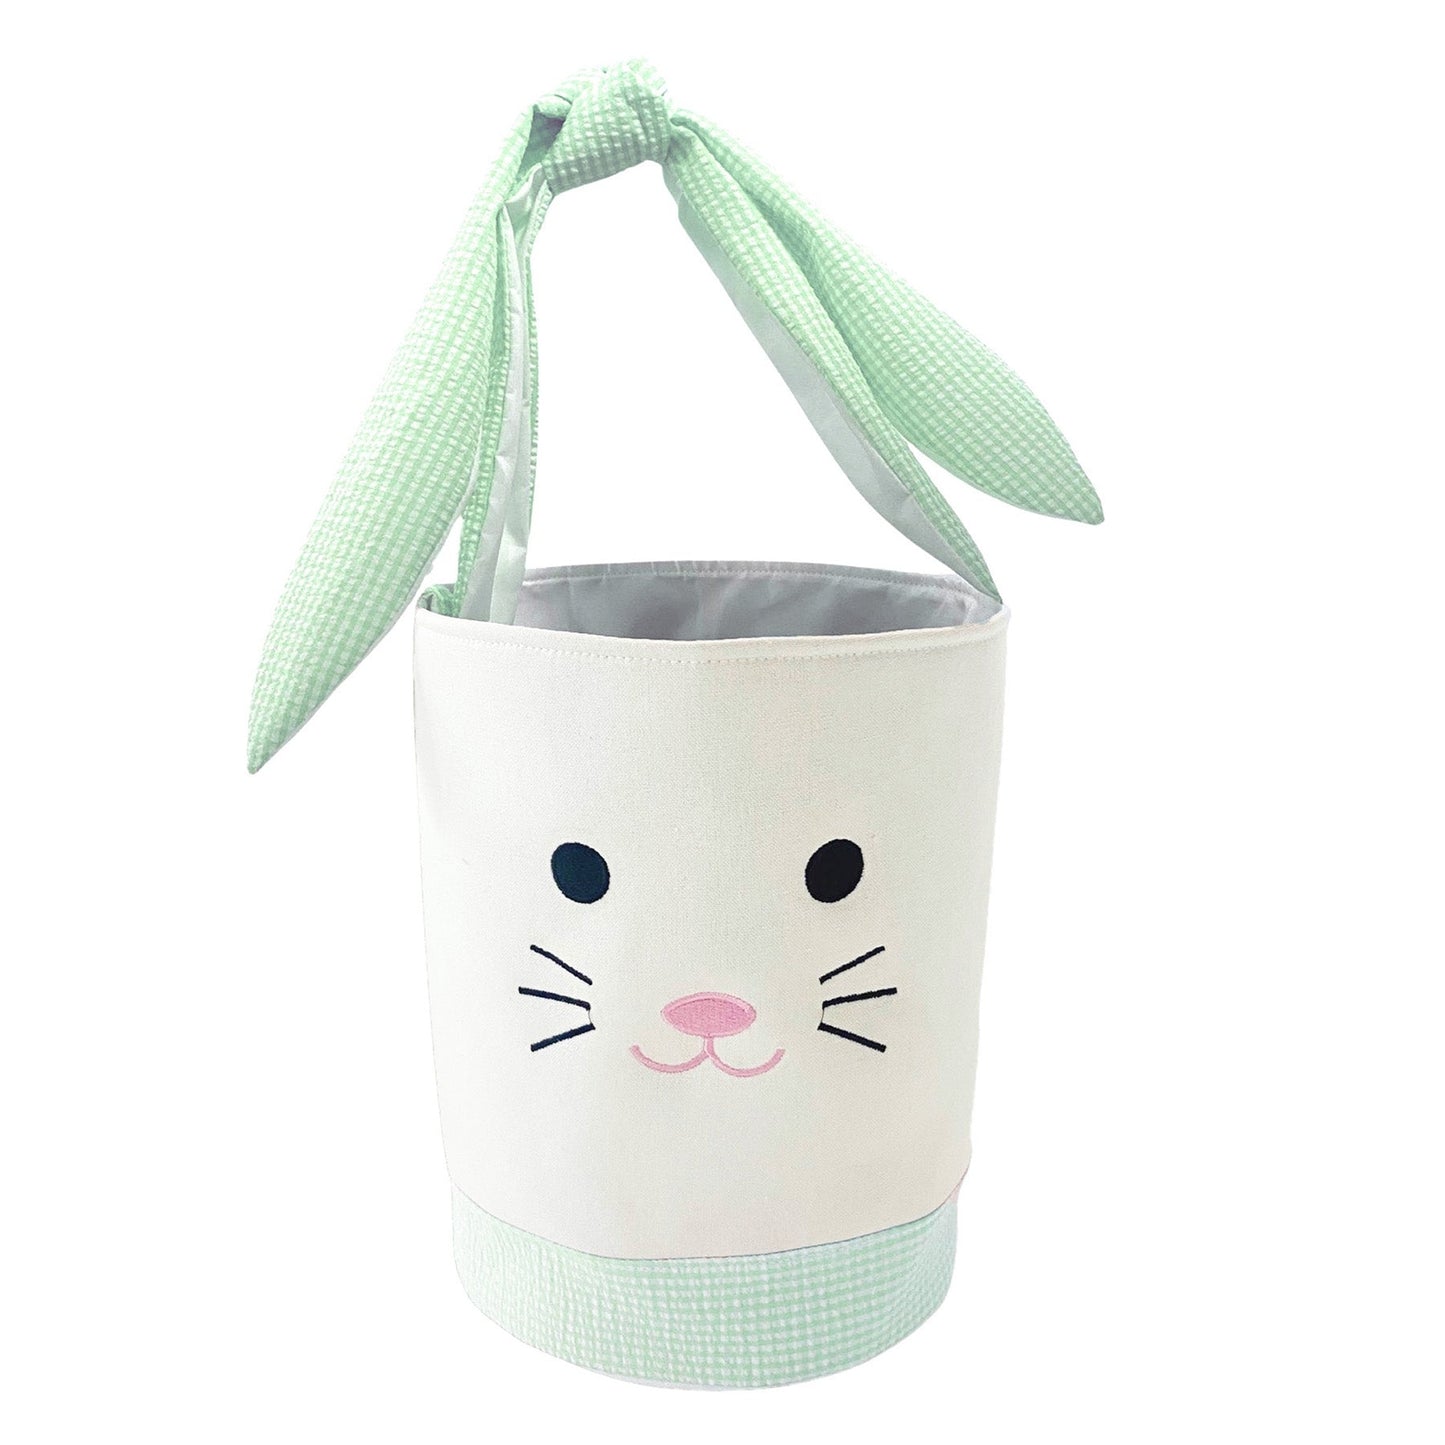 Bunny Easter Basket - Mint Green